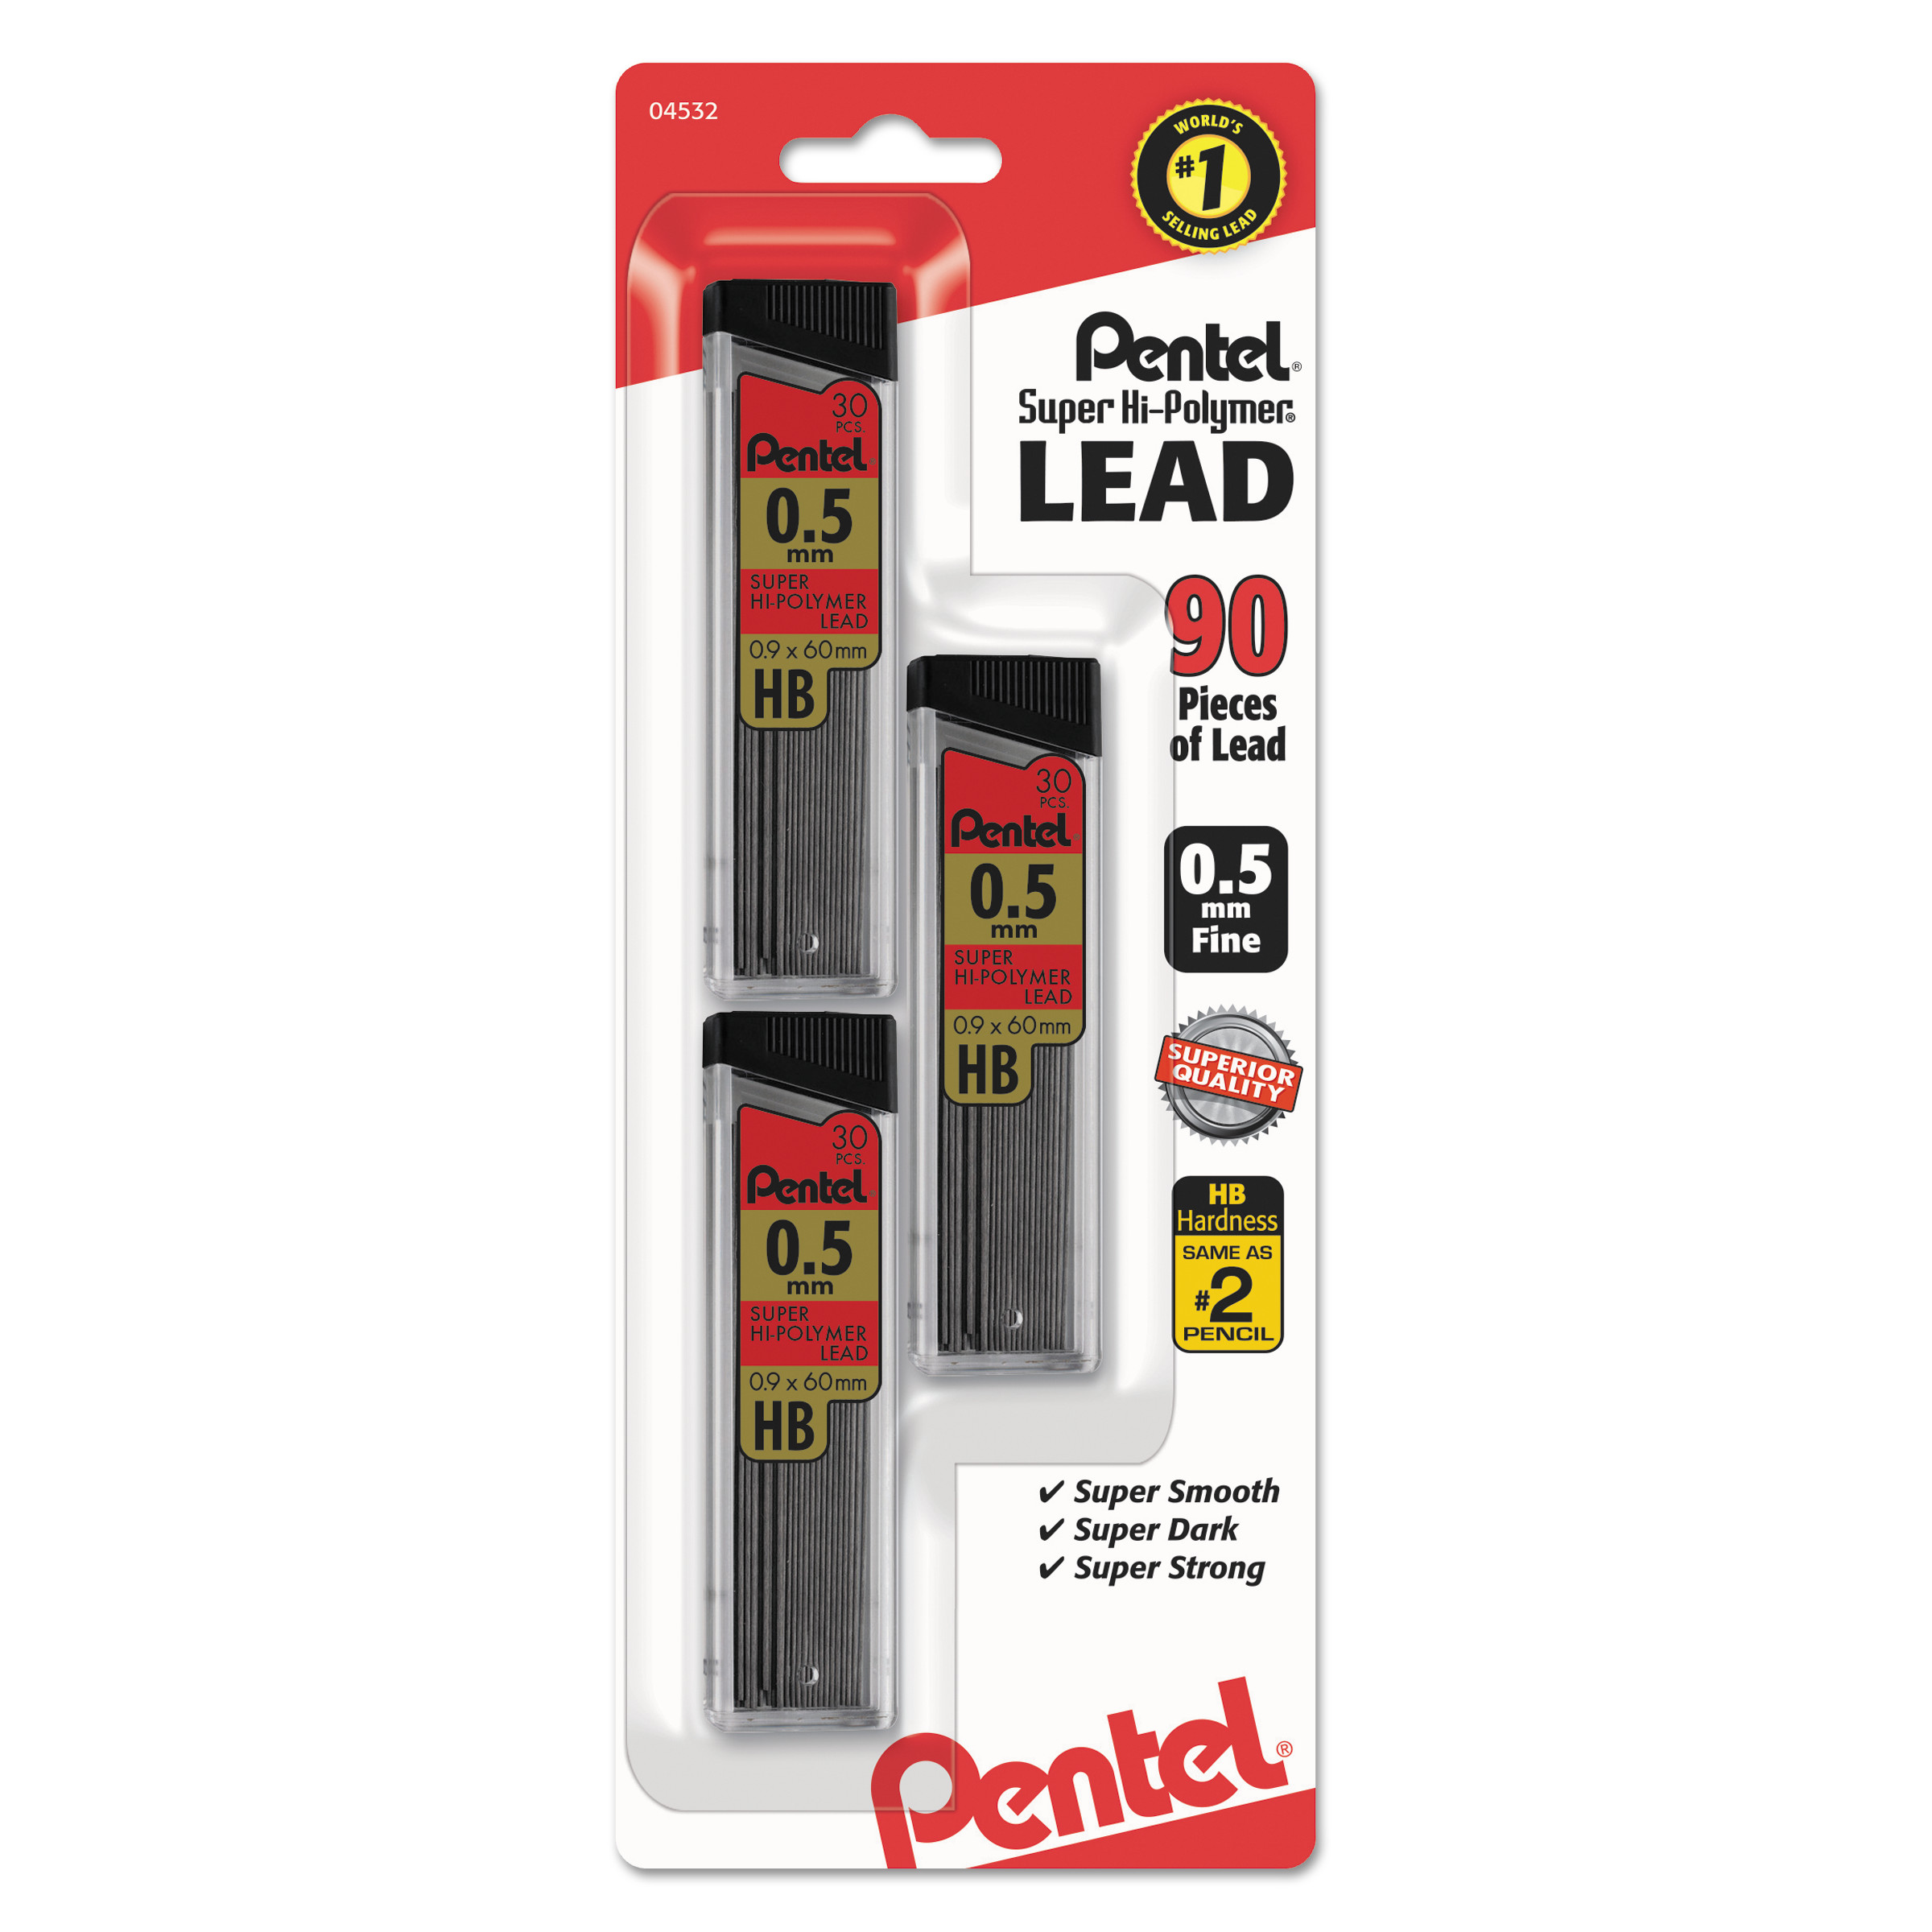 #100-B ultra fine 144 pieces of lead Pentel hi-polymer lead refill 0.5mm 